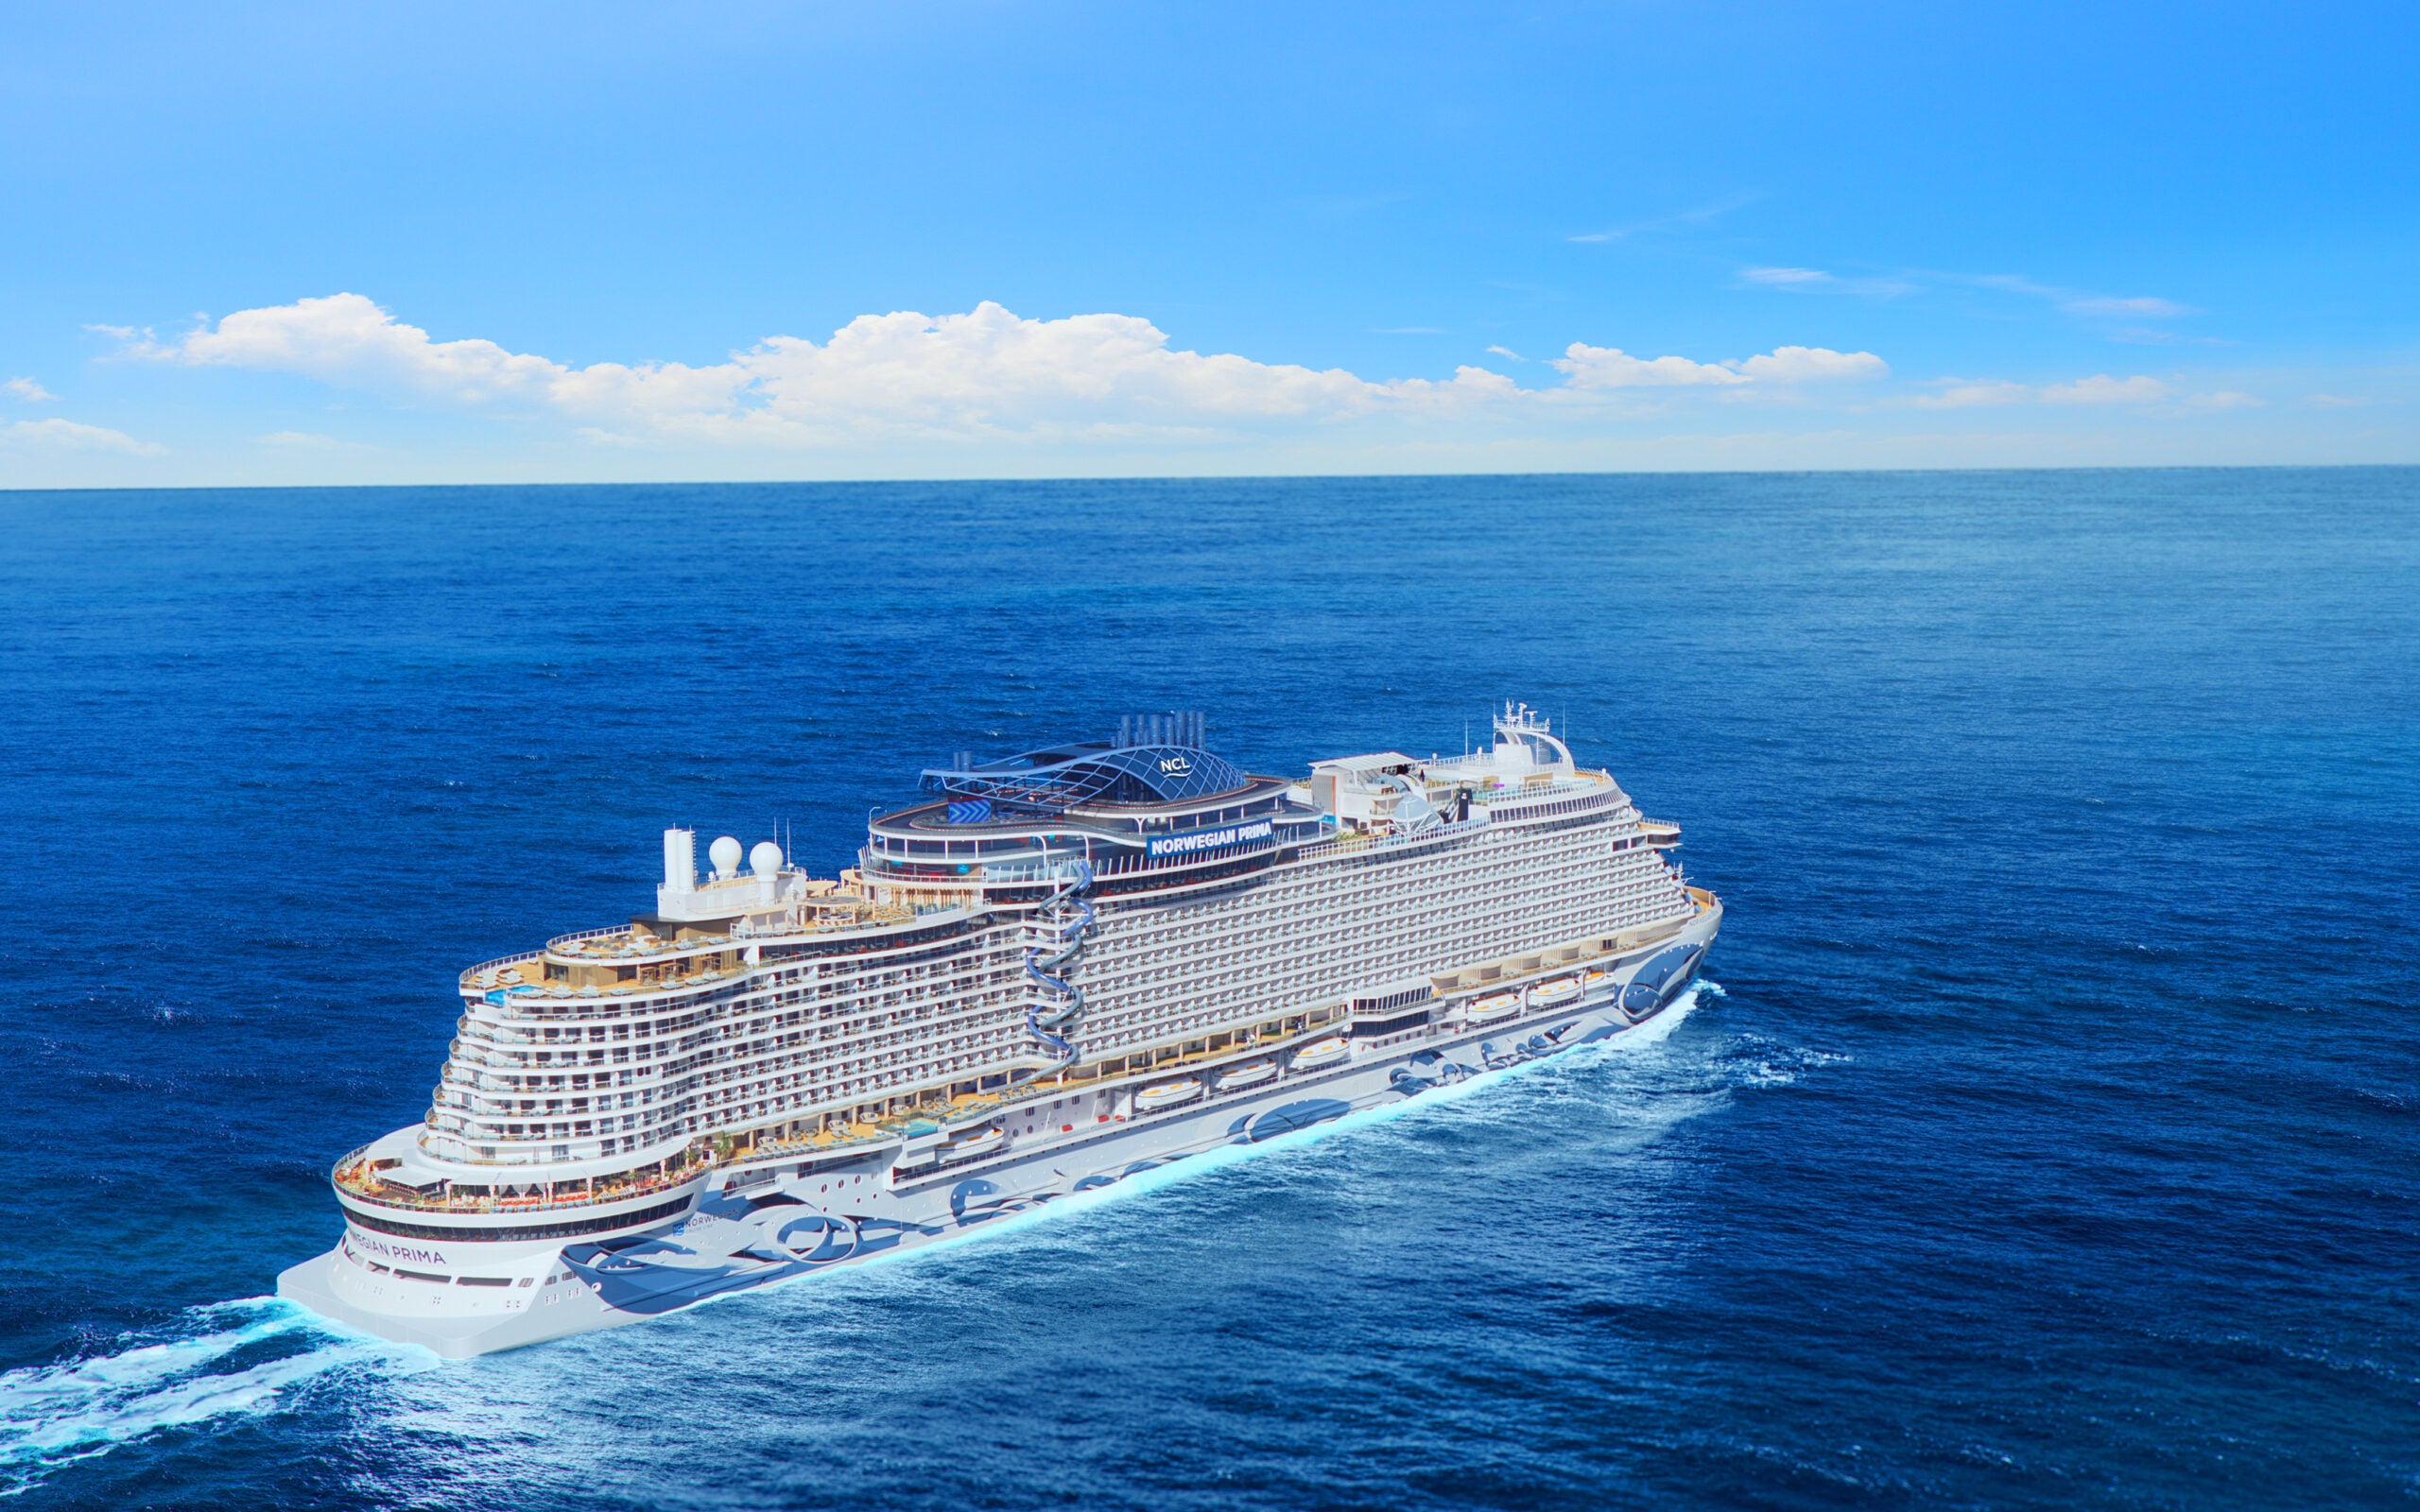 Norwegian Cruise Line credit card review: Full details